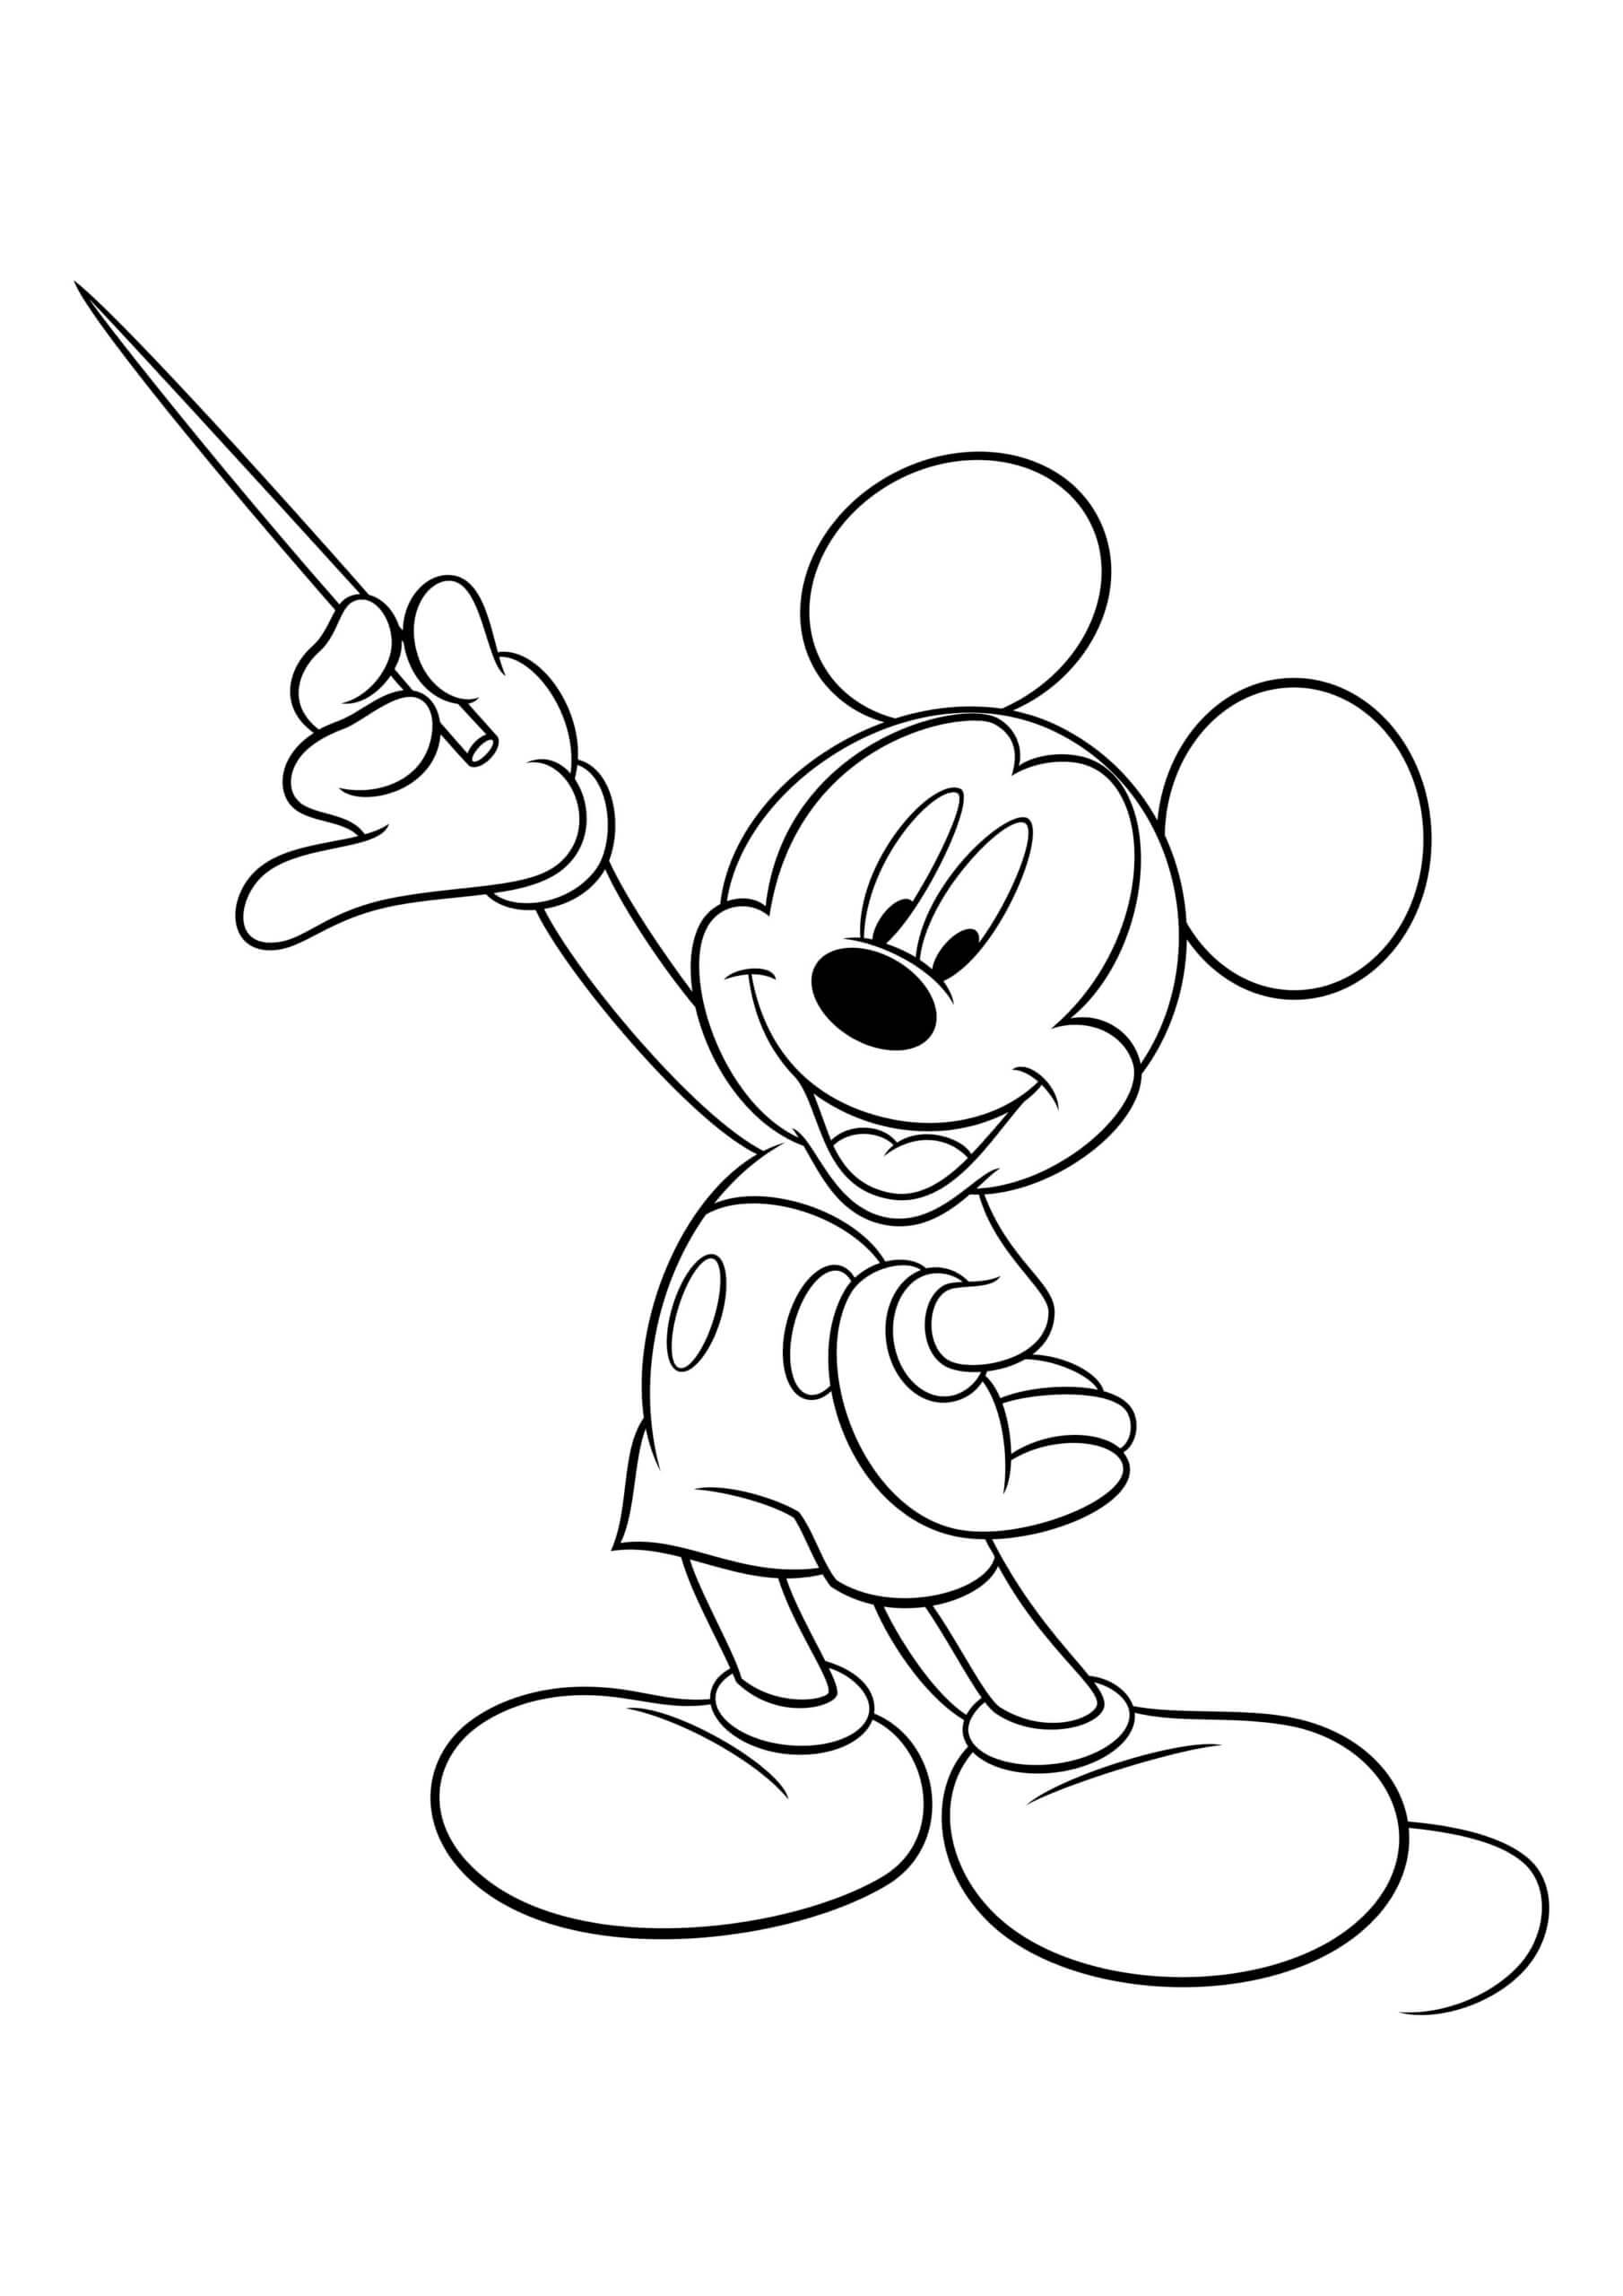 Mickey Mouse Segurando a Varinha Mágica para colorir